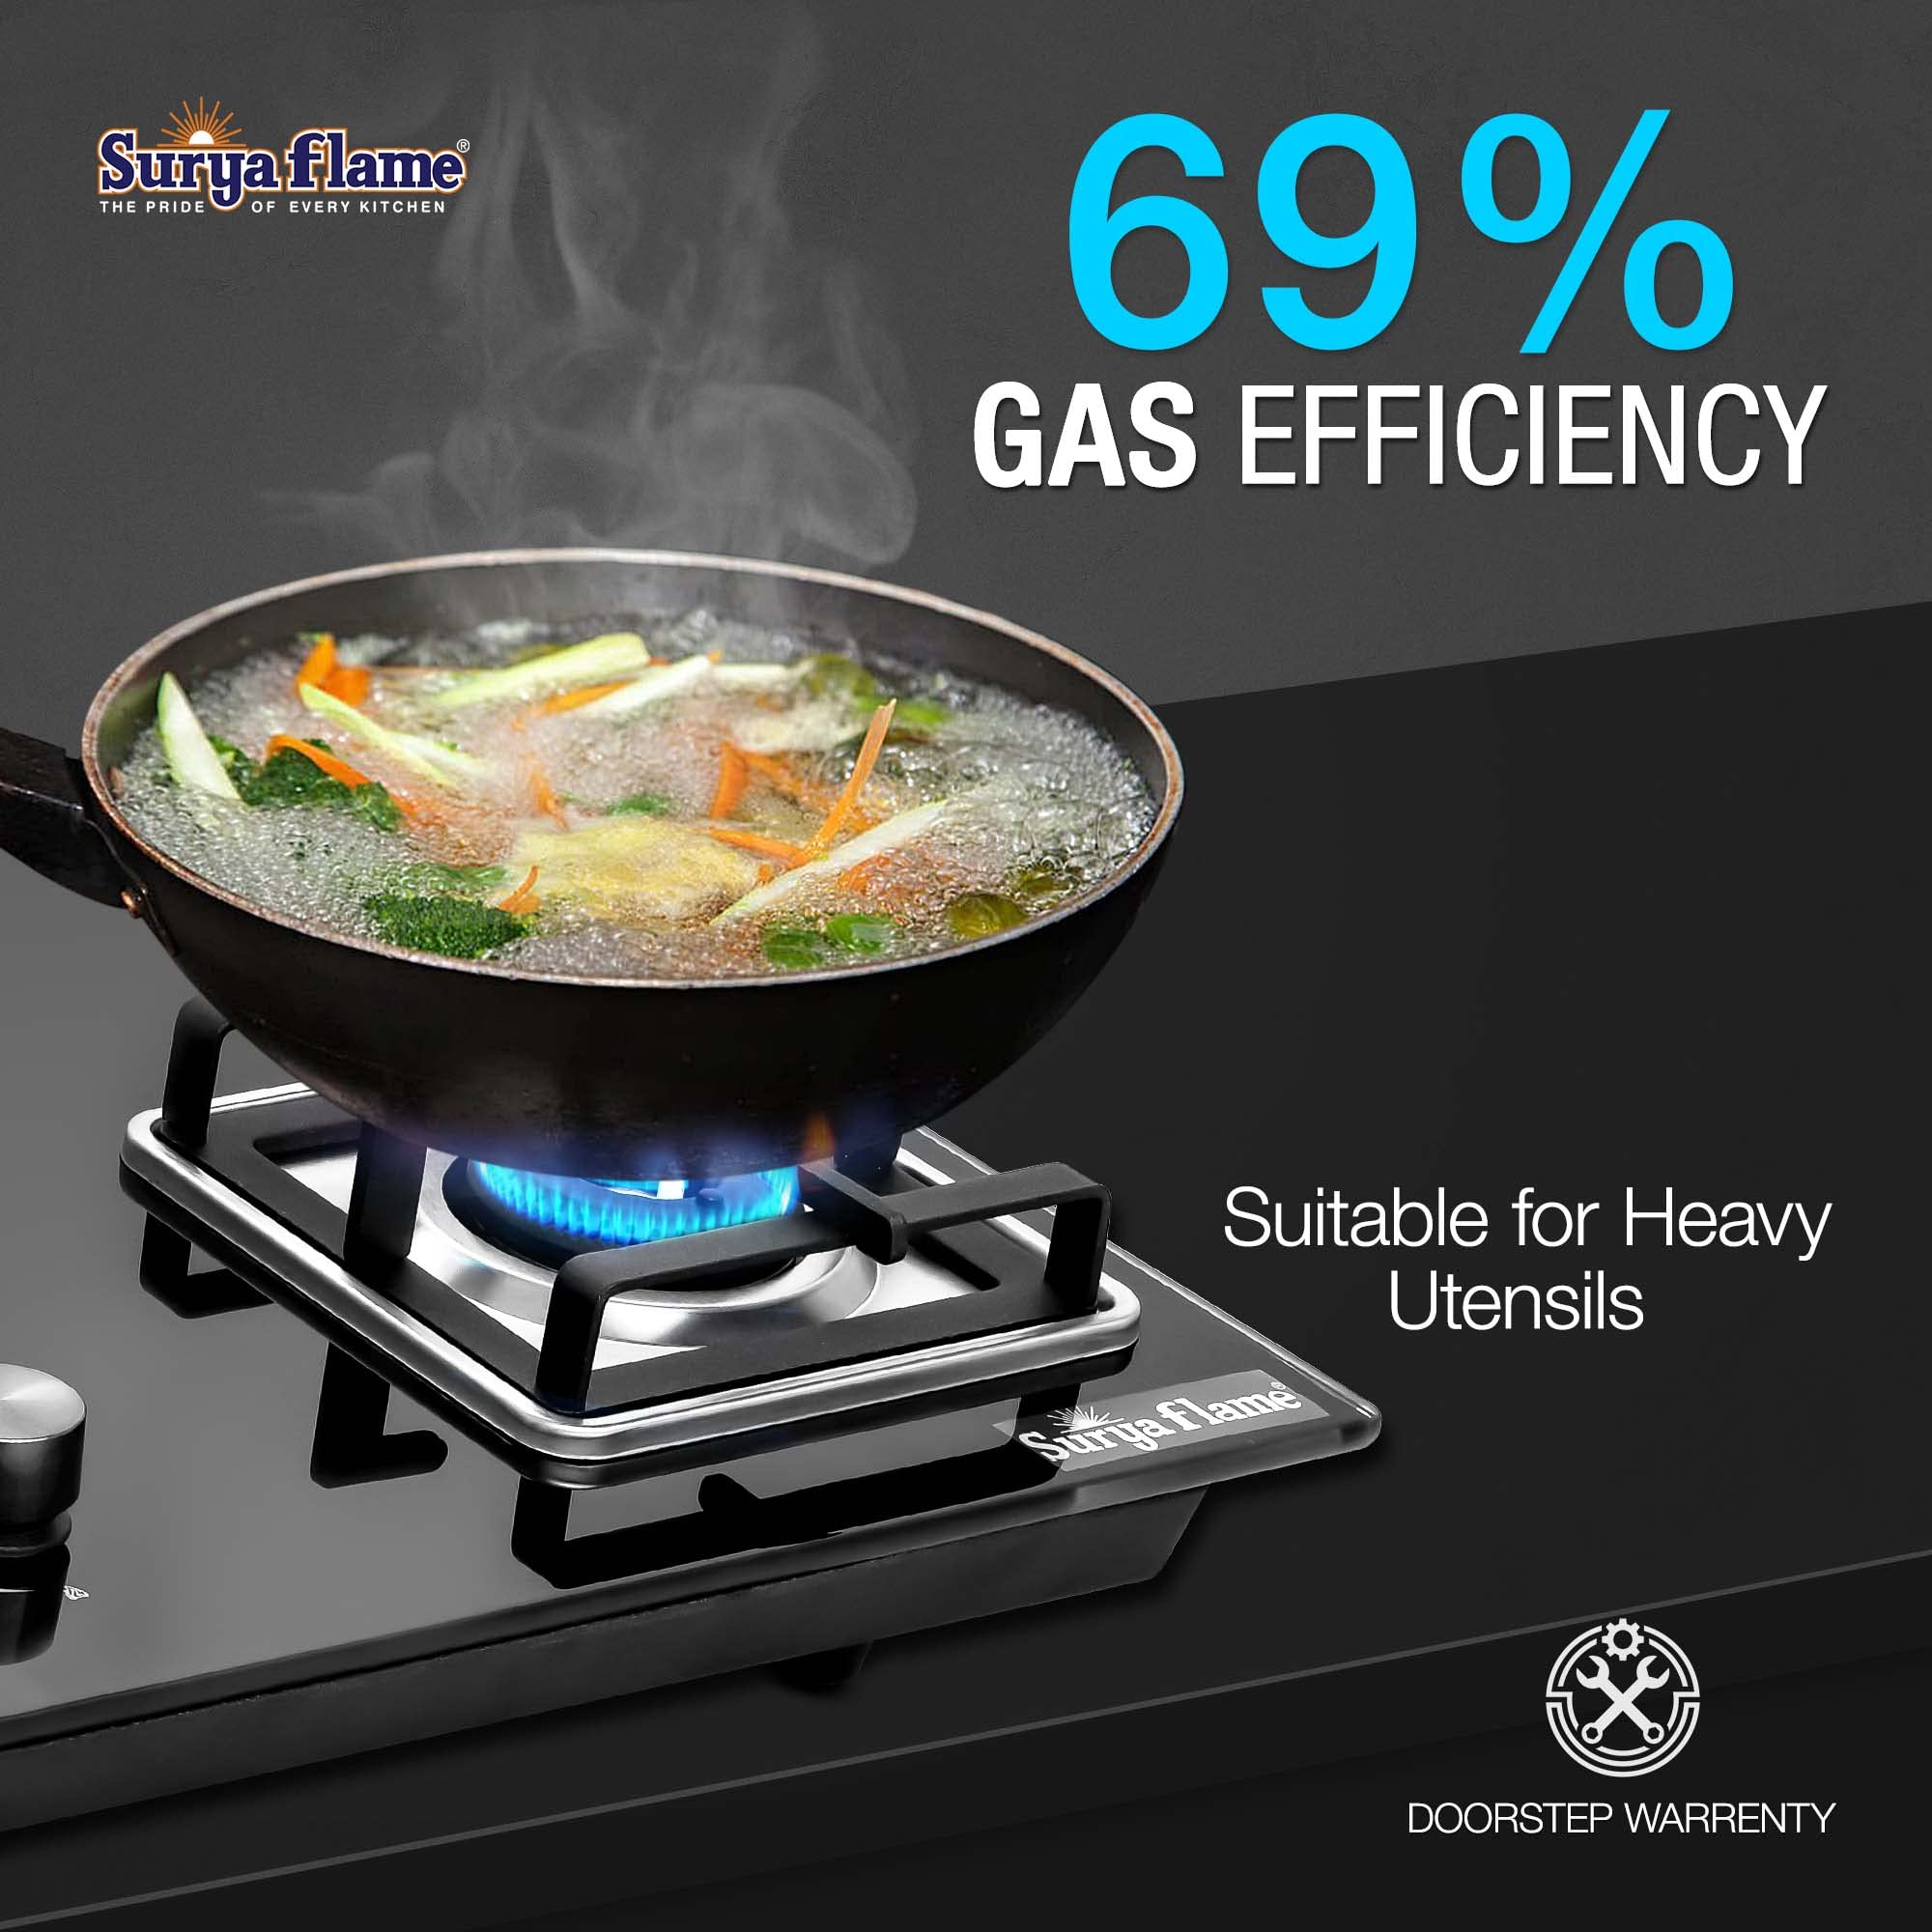 Surya Flame ADORE 5 Burner Glass Top, Black Body LPG Stove with 69% Thermal Efficiency - 2 Years Complete Doorstep Warranty